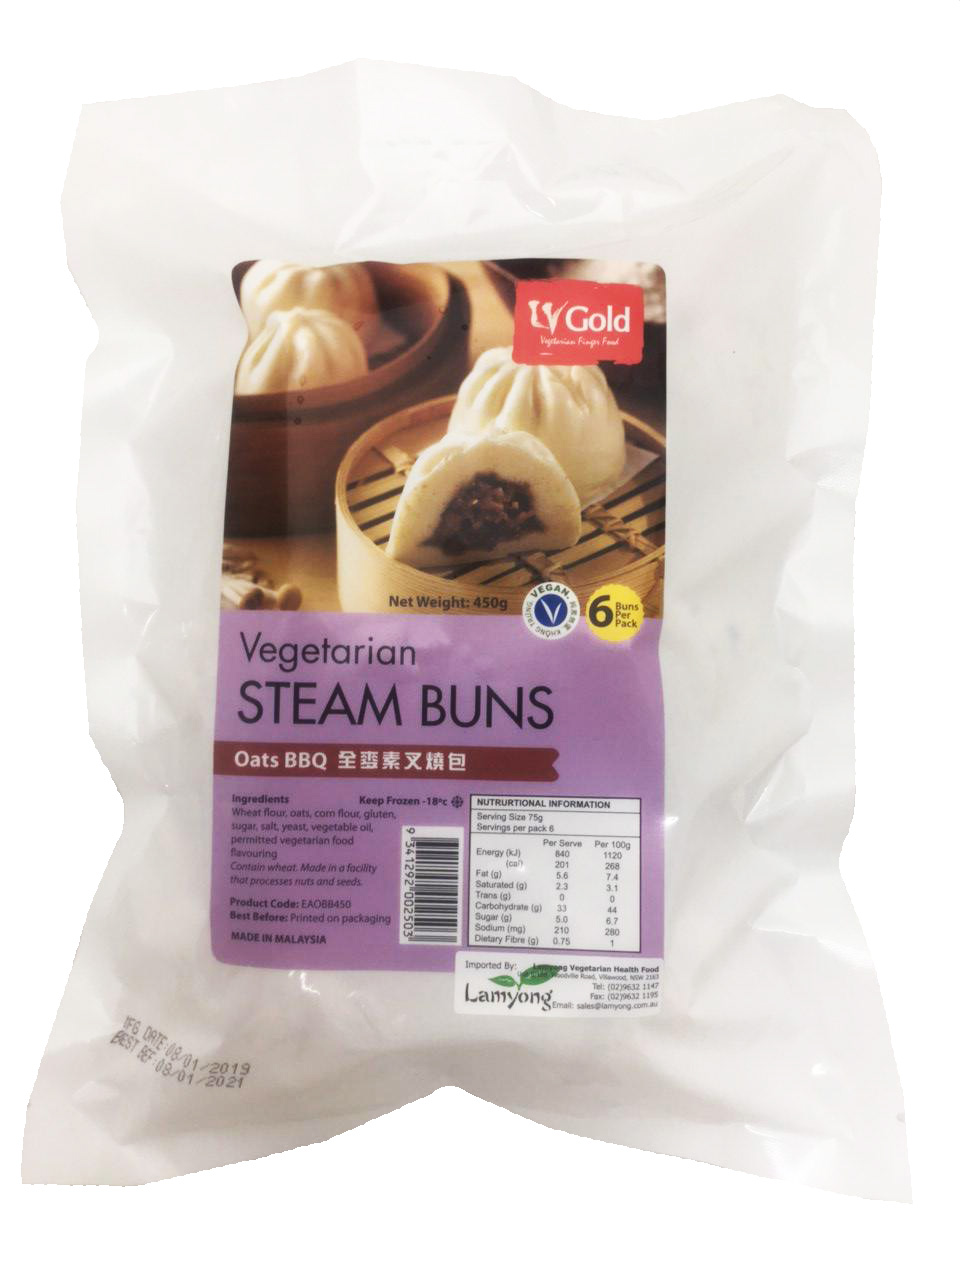 LV Gold Vegan BBQ Buns (Oats Skin Pastry)6pcs - Click Image to Close